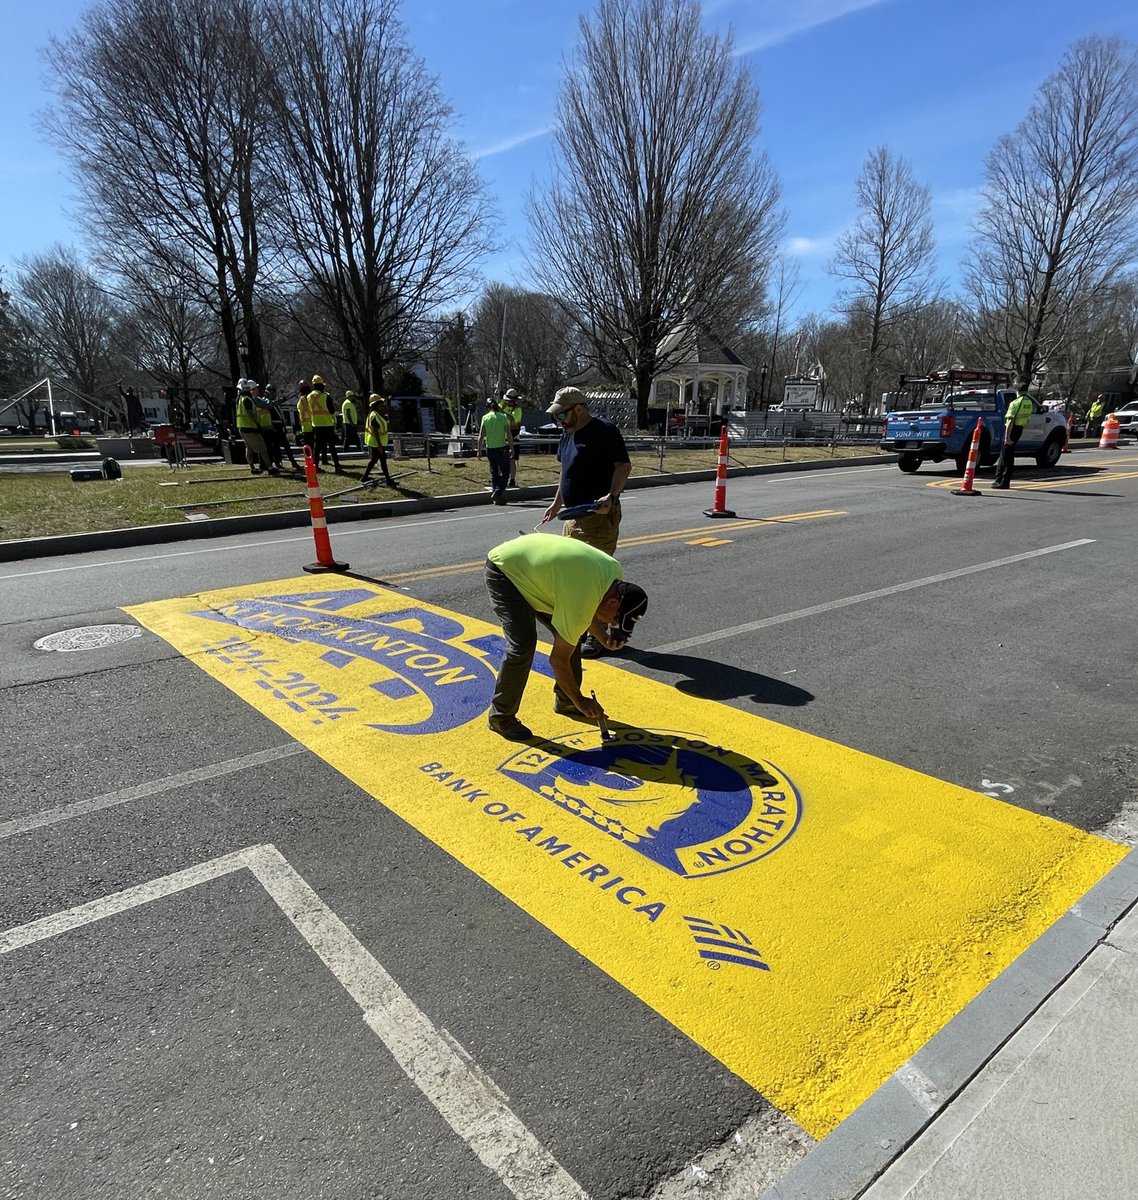 Crews are painting the ⁦@bostonmarathon⁩ starting line in Hopkinton on this glorious spring morning. @baa #boston128 ⁦@BankofAmerica⁩ ⁦@WMMajors⁩